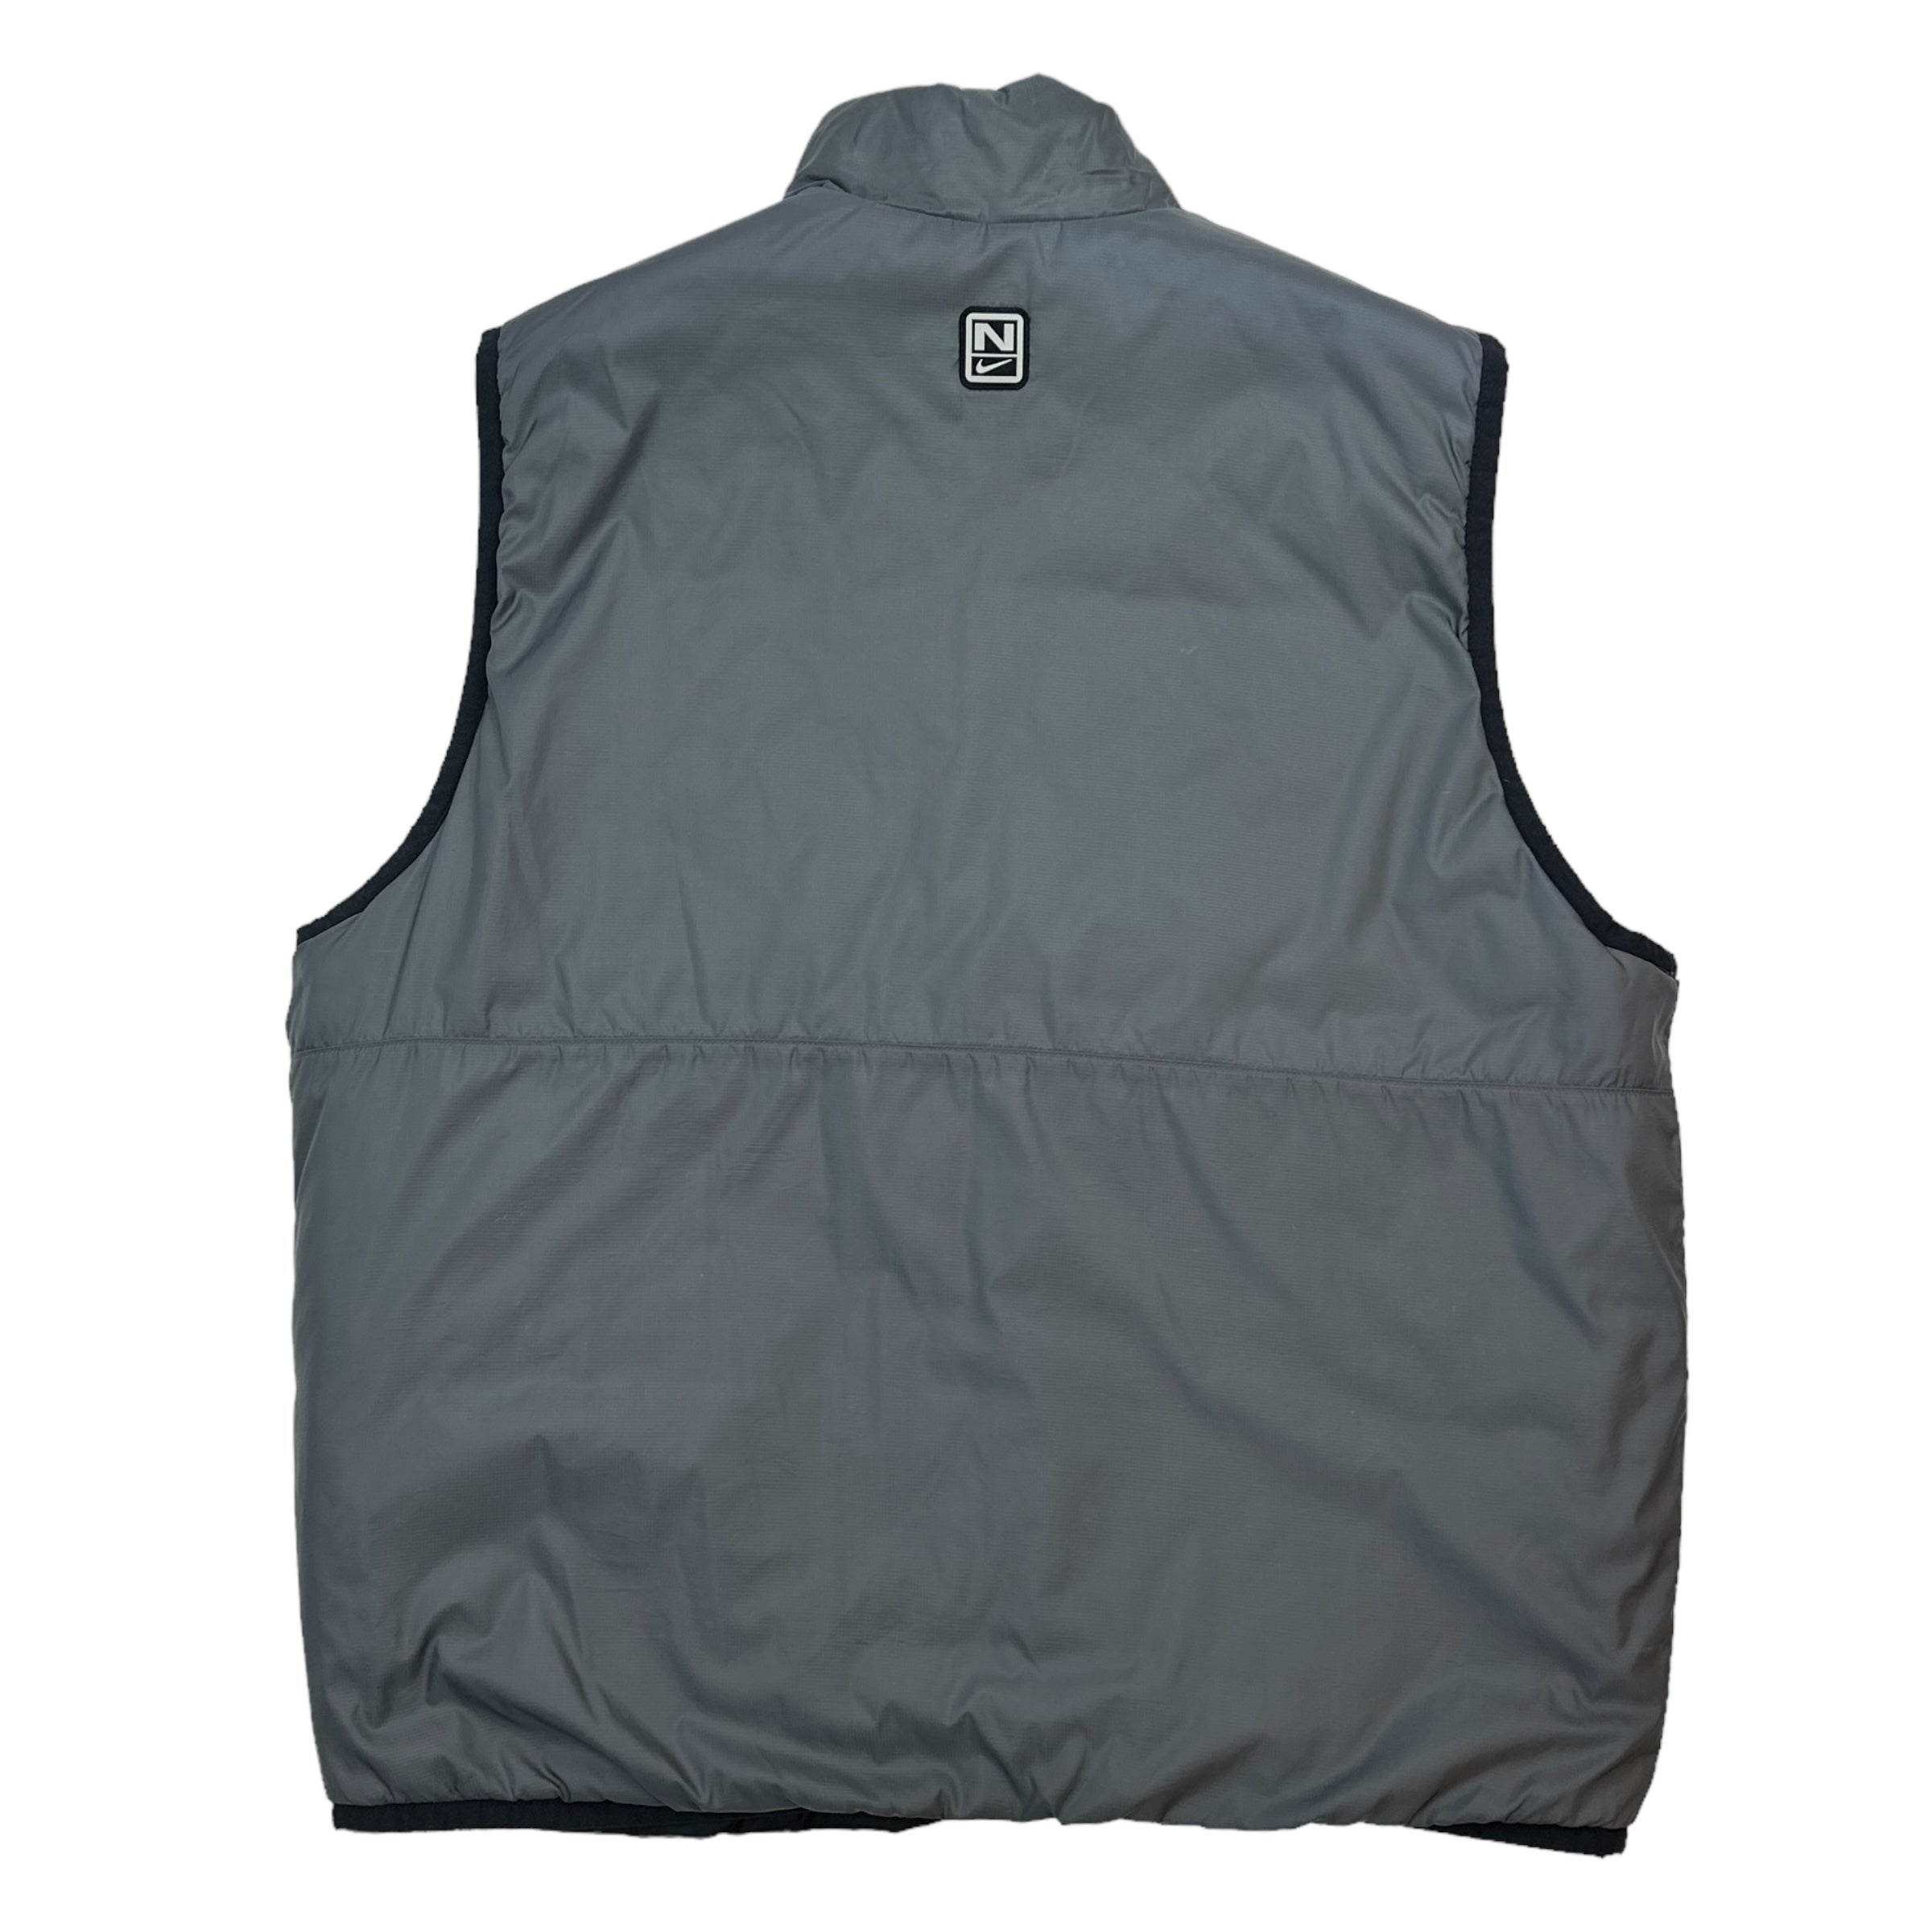 Vintage Nike Reversible Vest Grey/Black